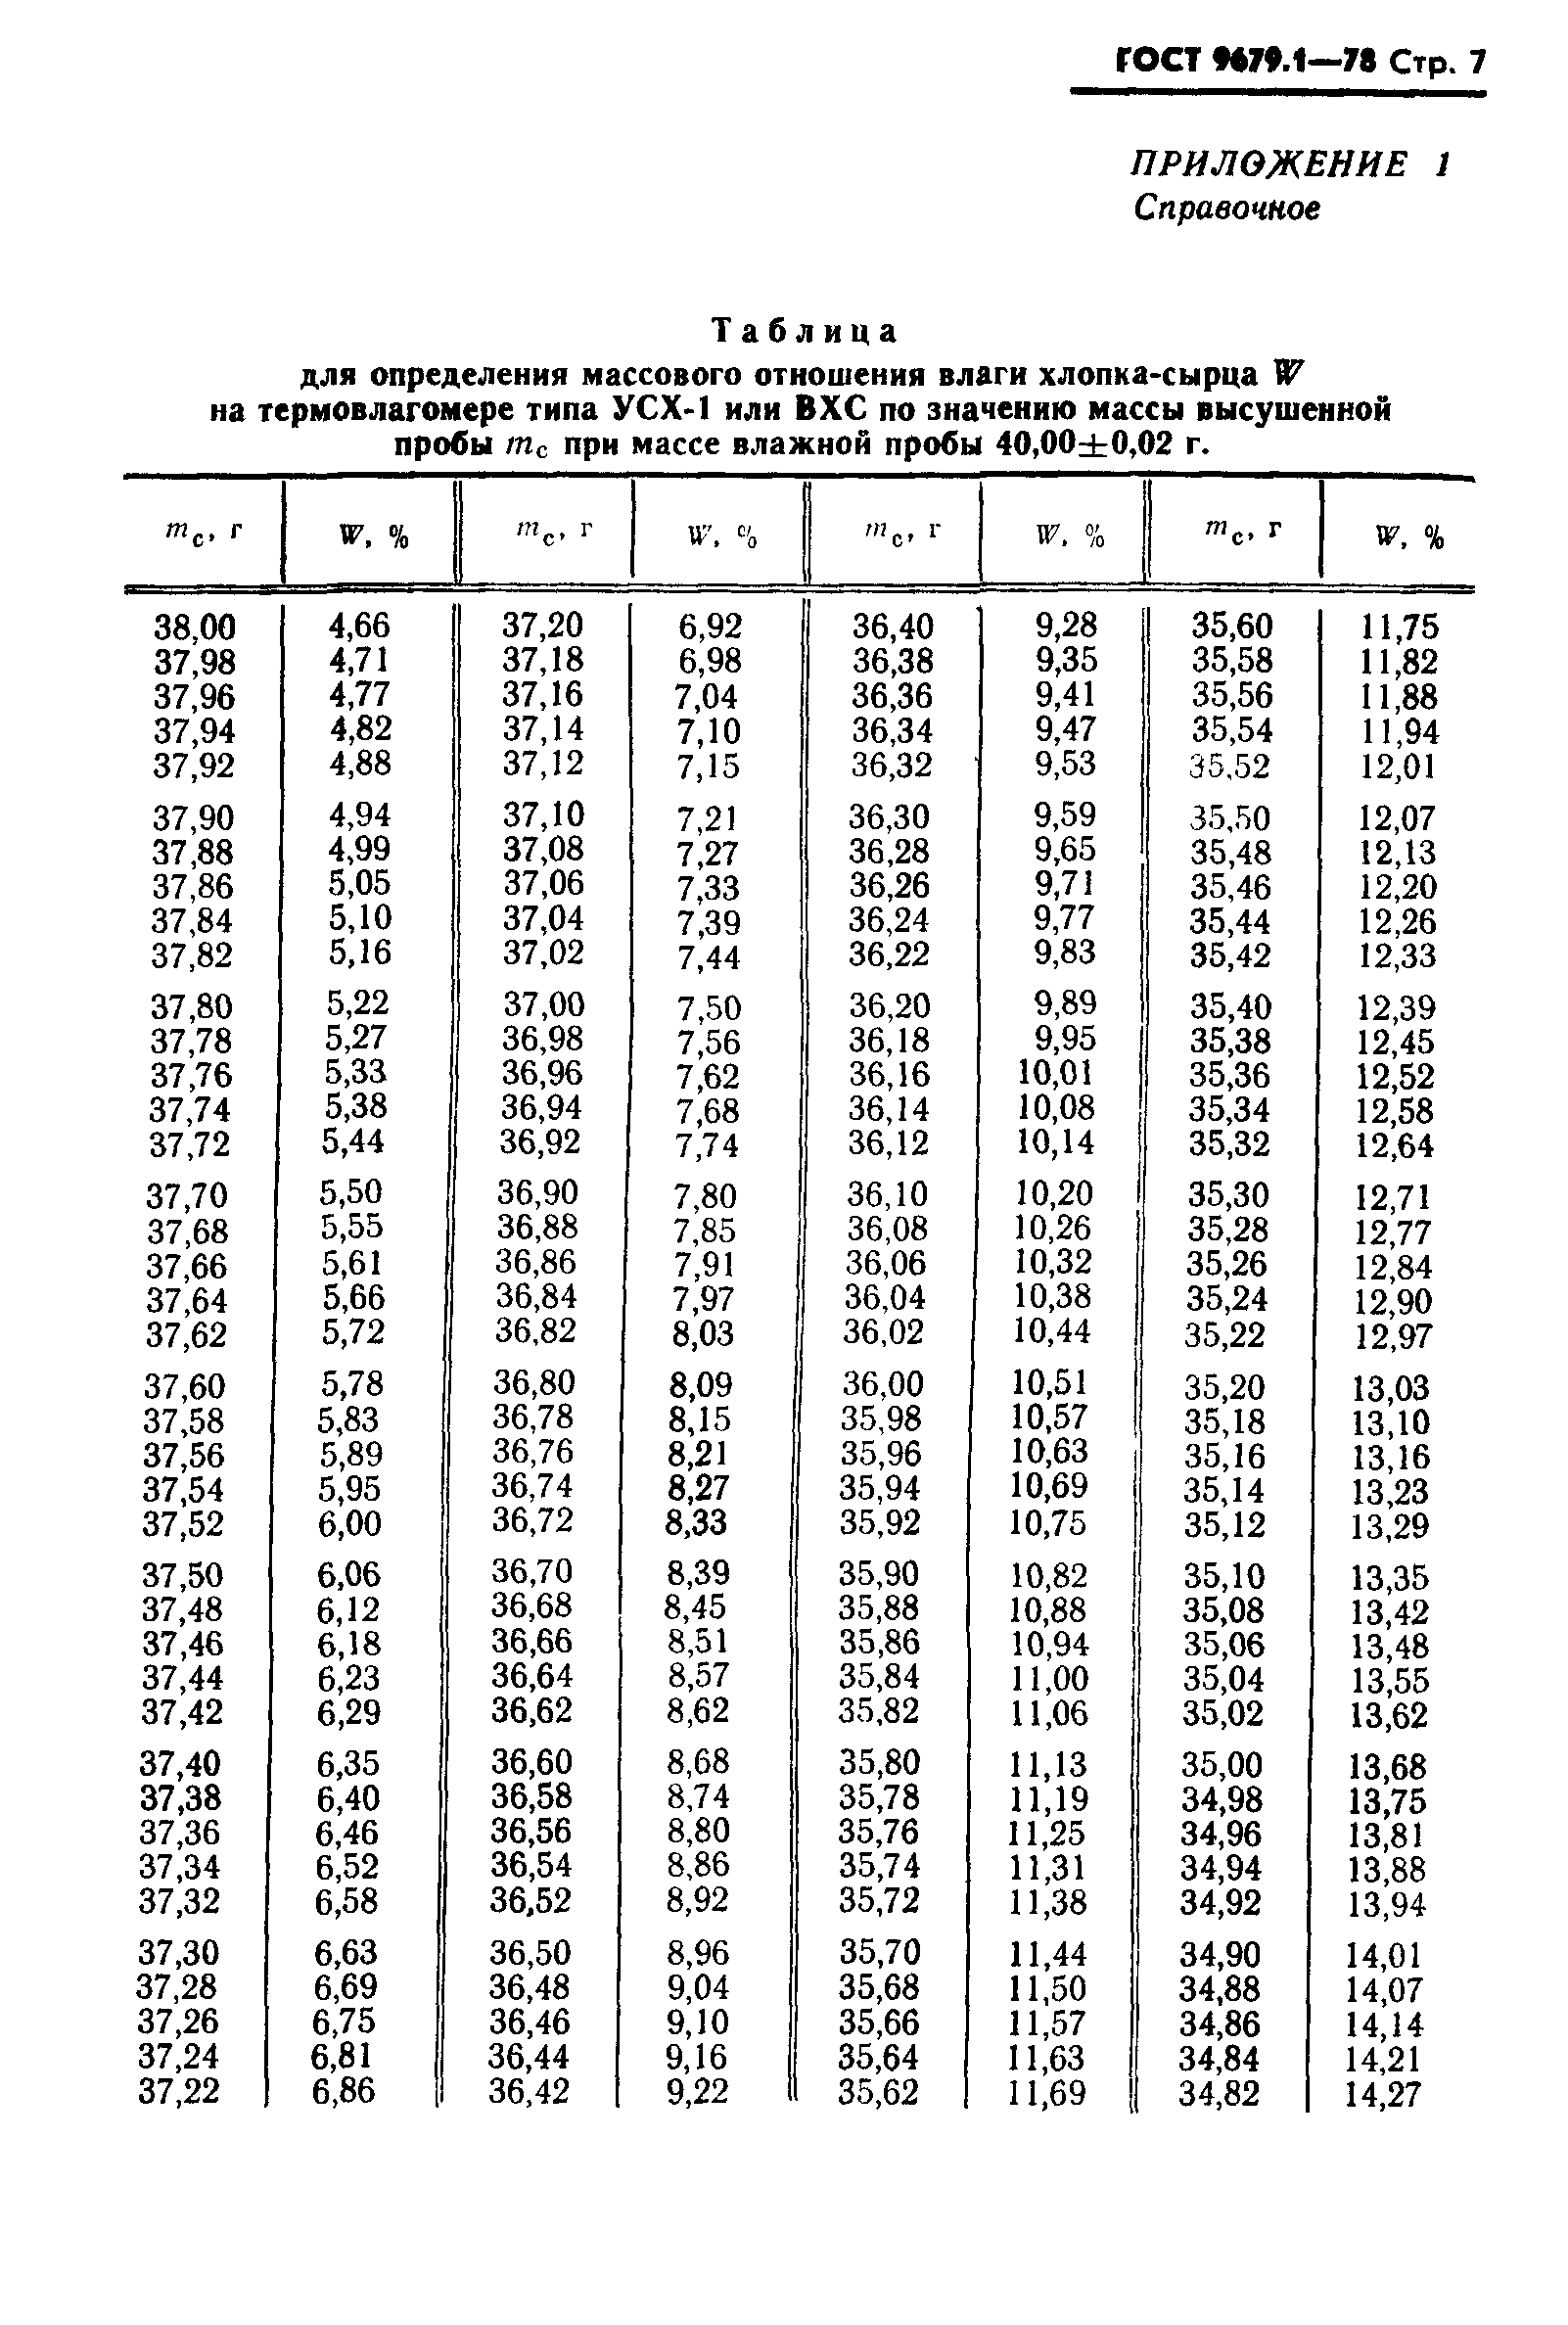 ГОСТ 9679.1-78